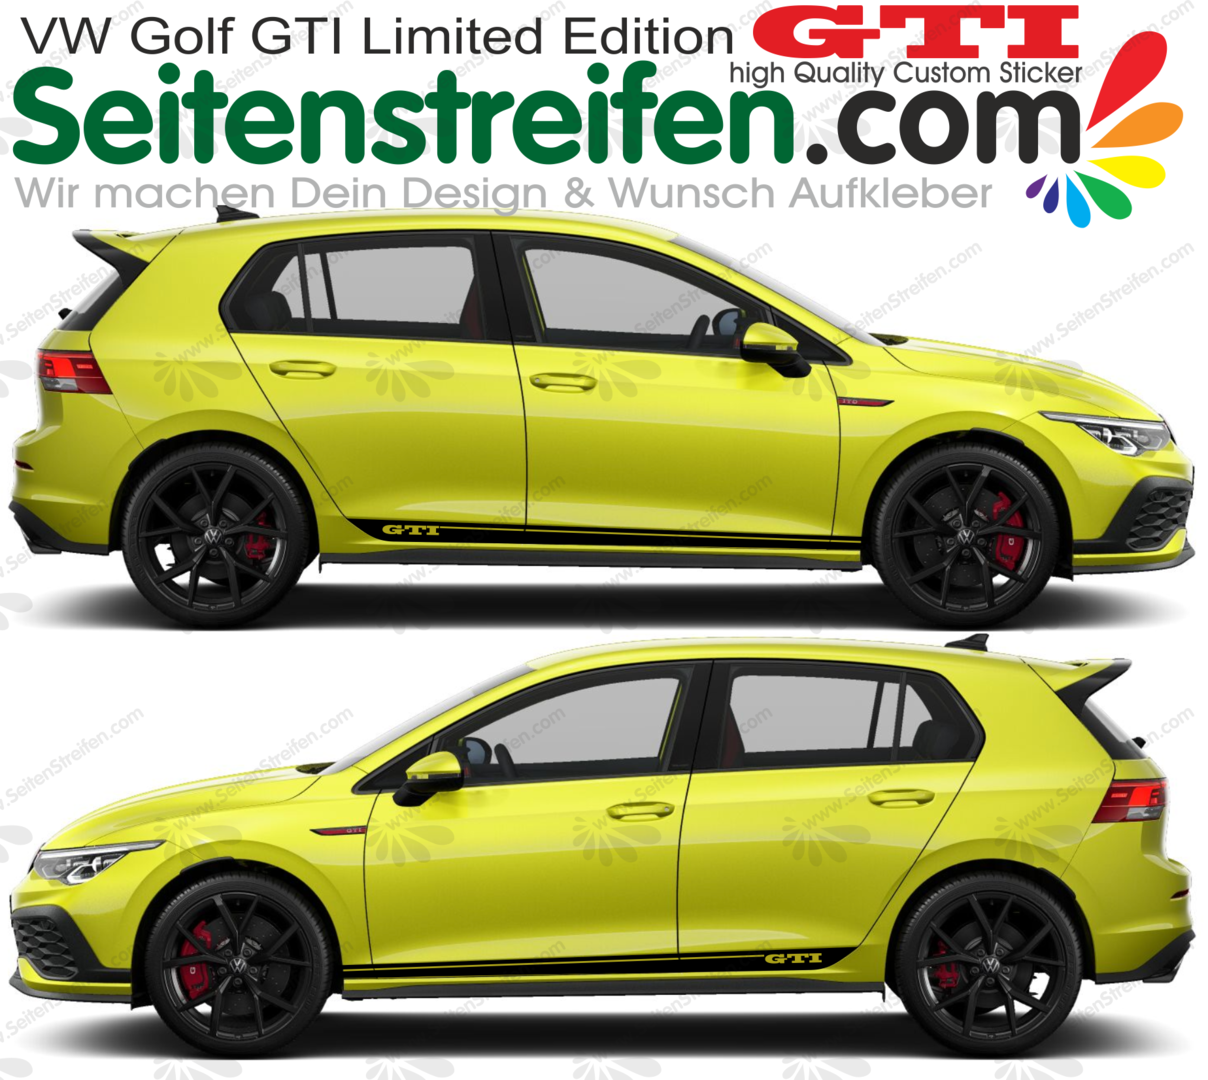 VW Golf GTI Limited Edition  - adesivi strisce laterali adesive auto sticker set